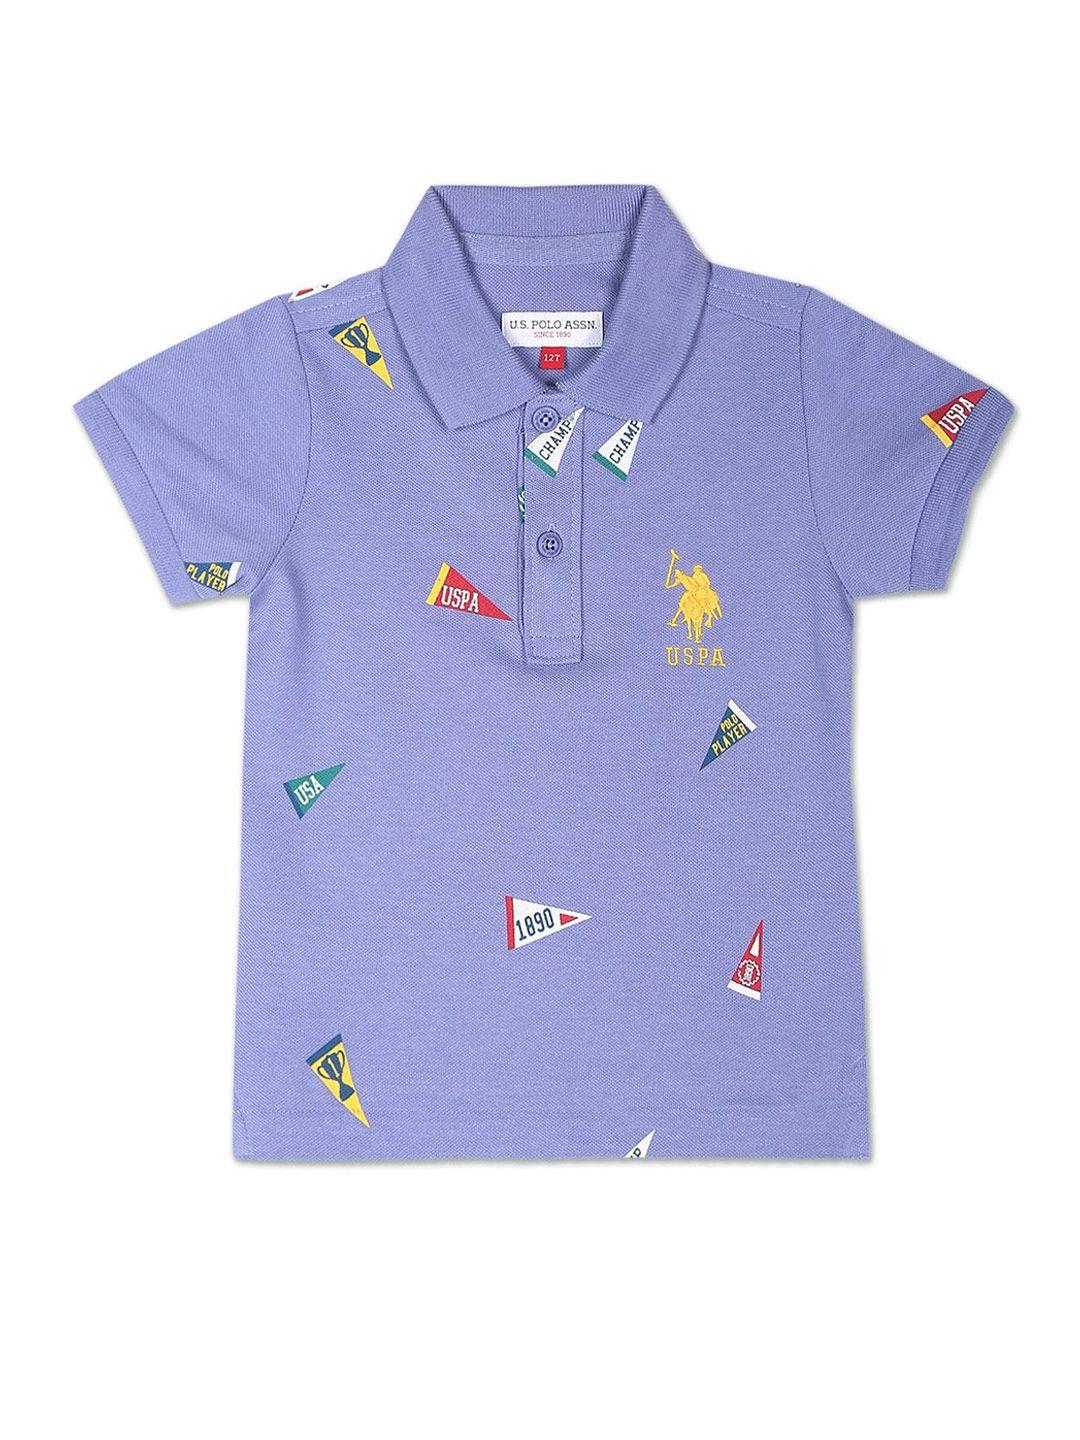 u.s. polo assn. kids boys conversational printed polo collar pure cotton t-shirt